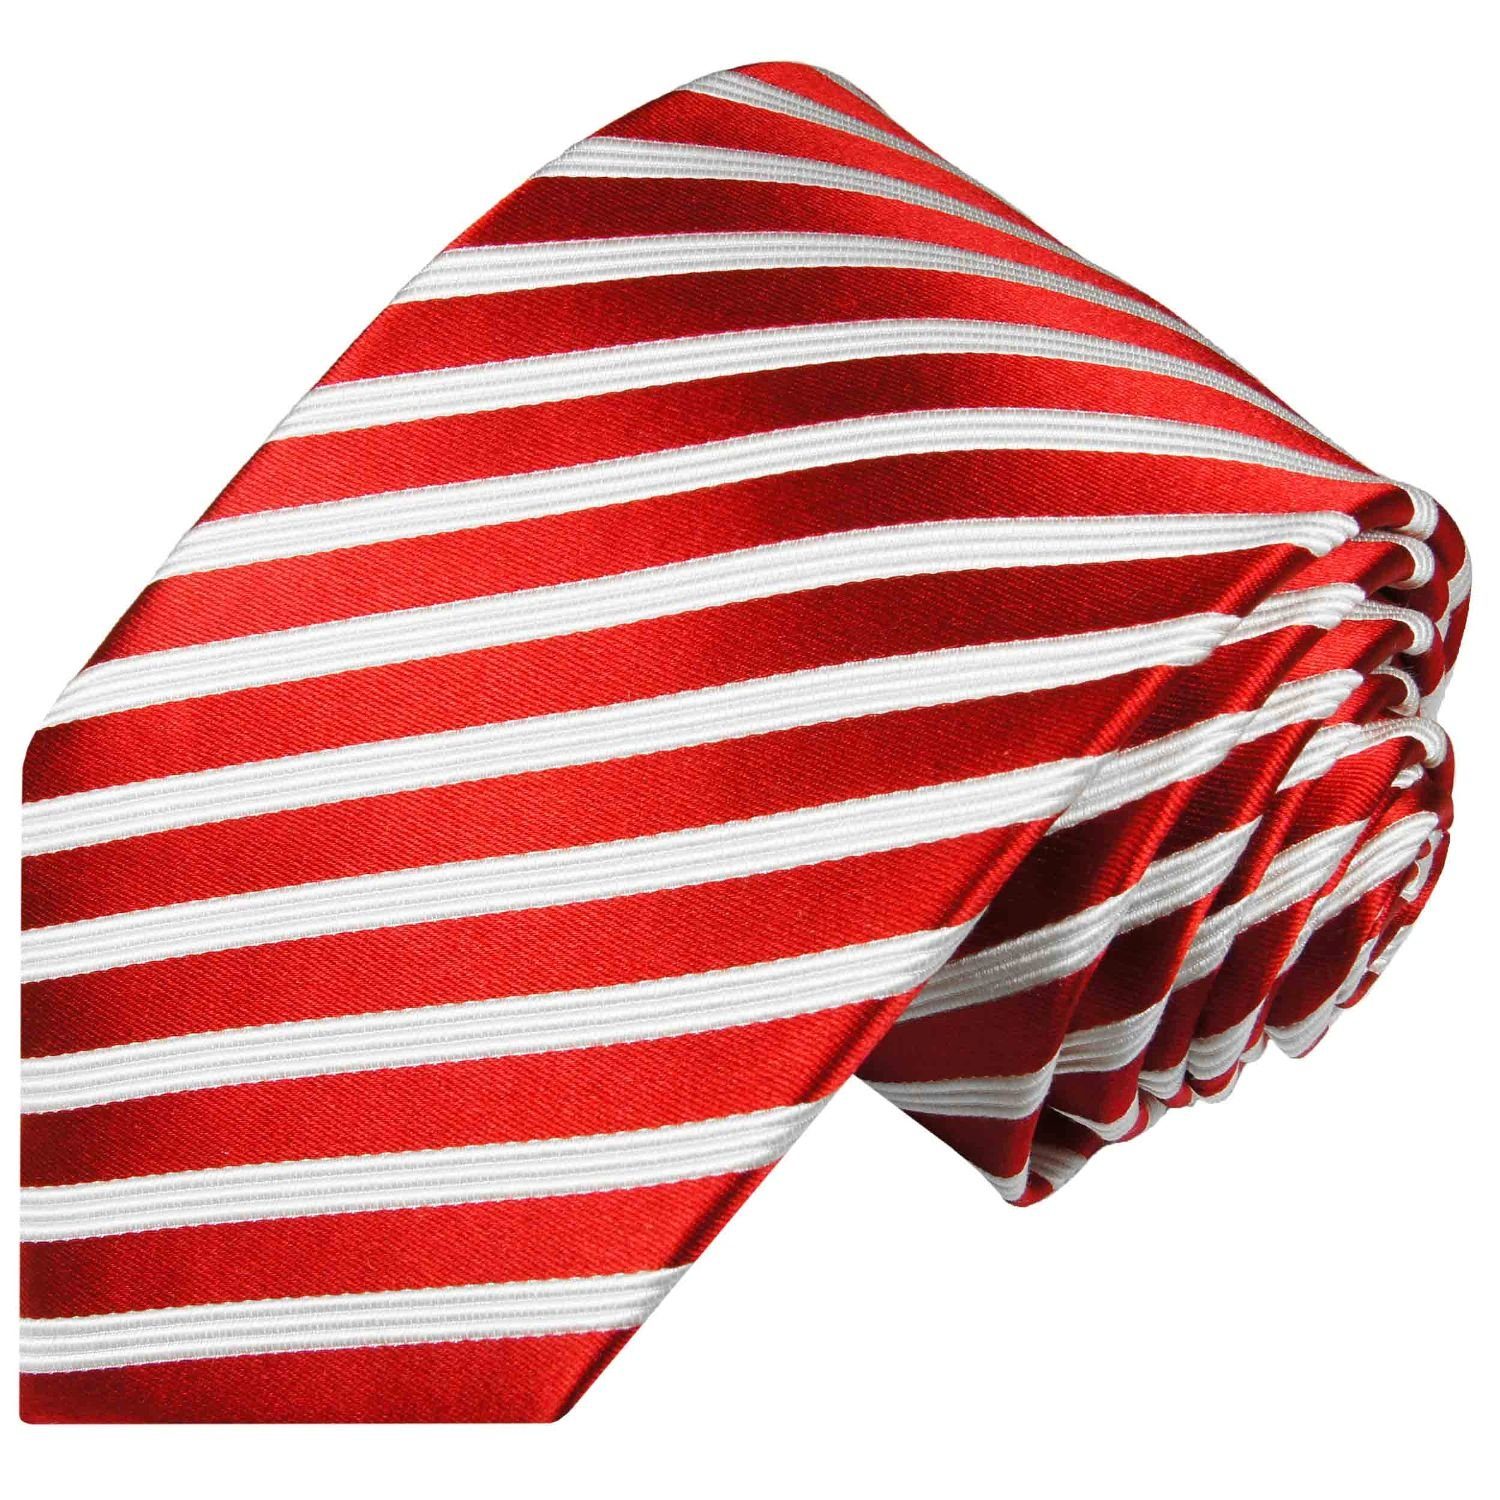 Paul Malone Krawatte Moderne Herren Seidenkrawatte gestreift 100% Seide Schmal (6cm), Extra lang (165cm), rot weiß 852 | Breite Krawatten